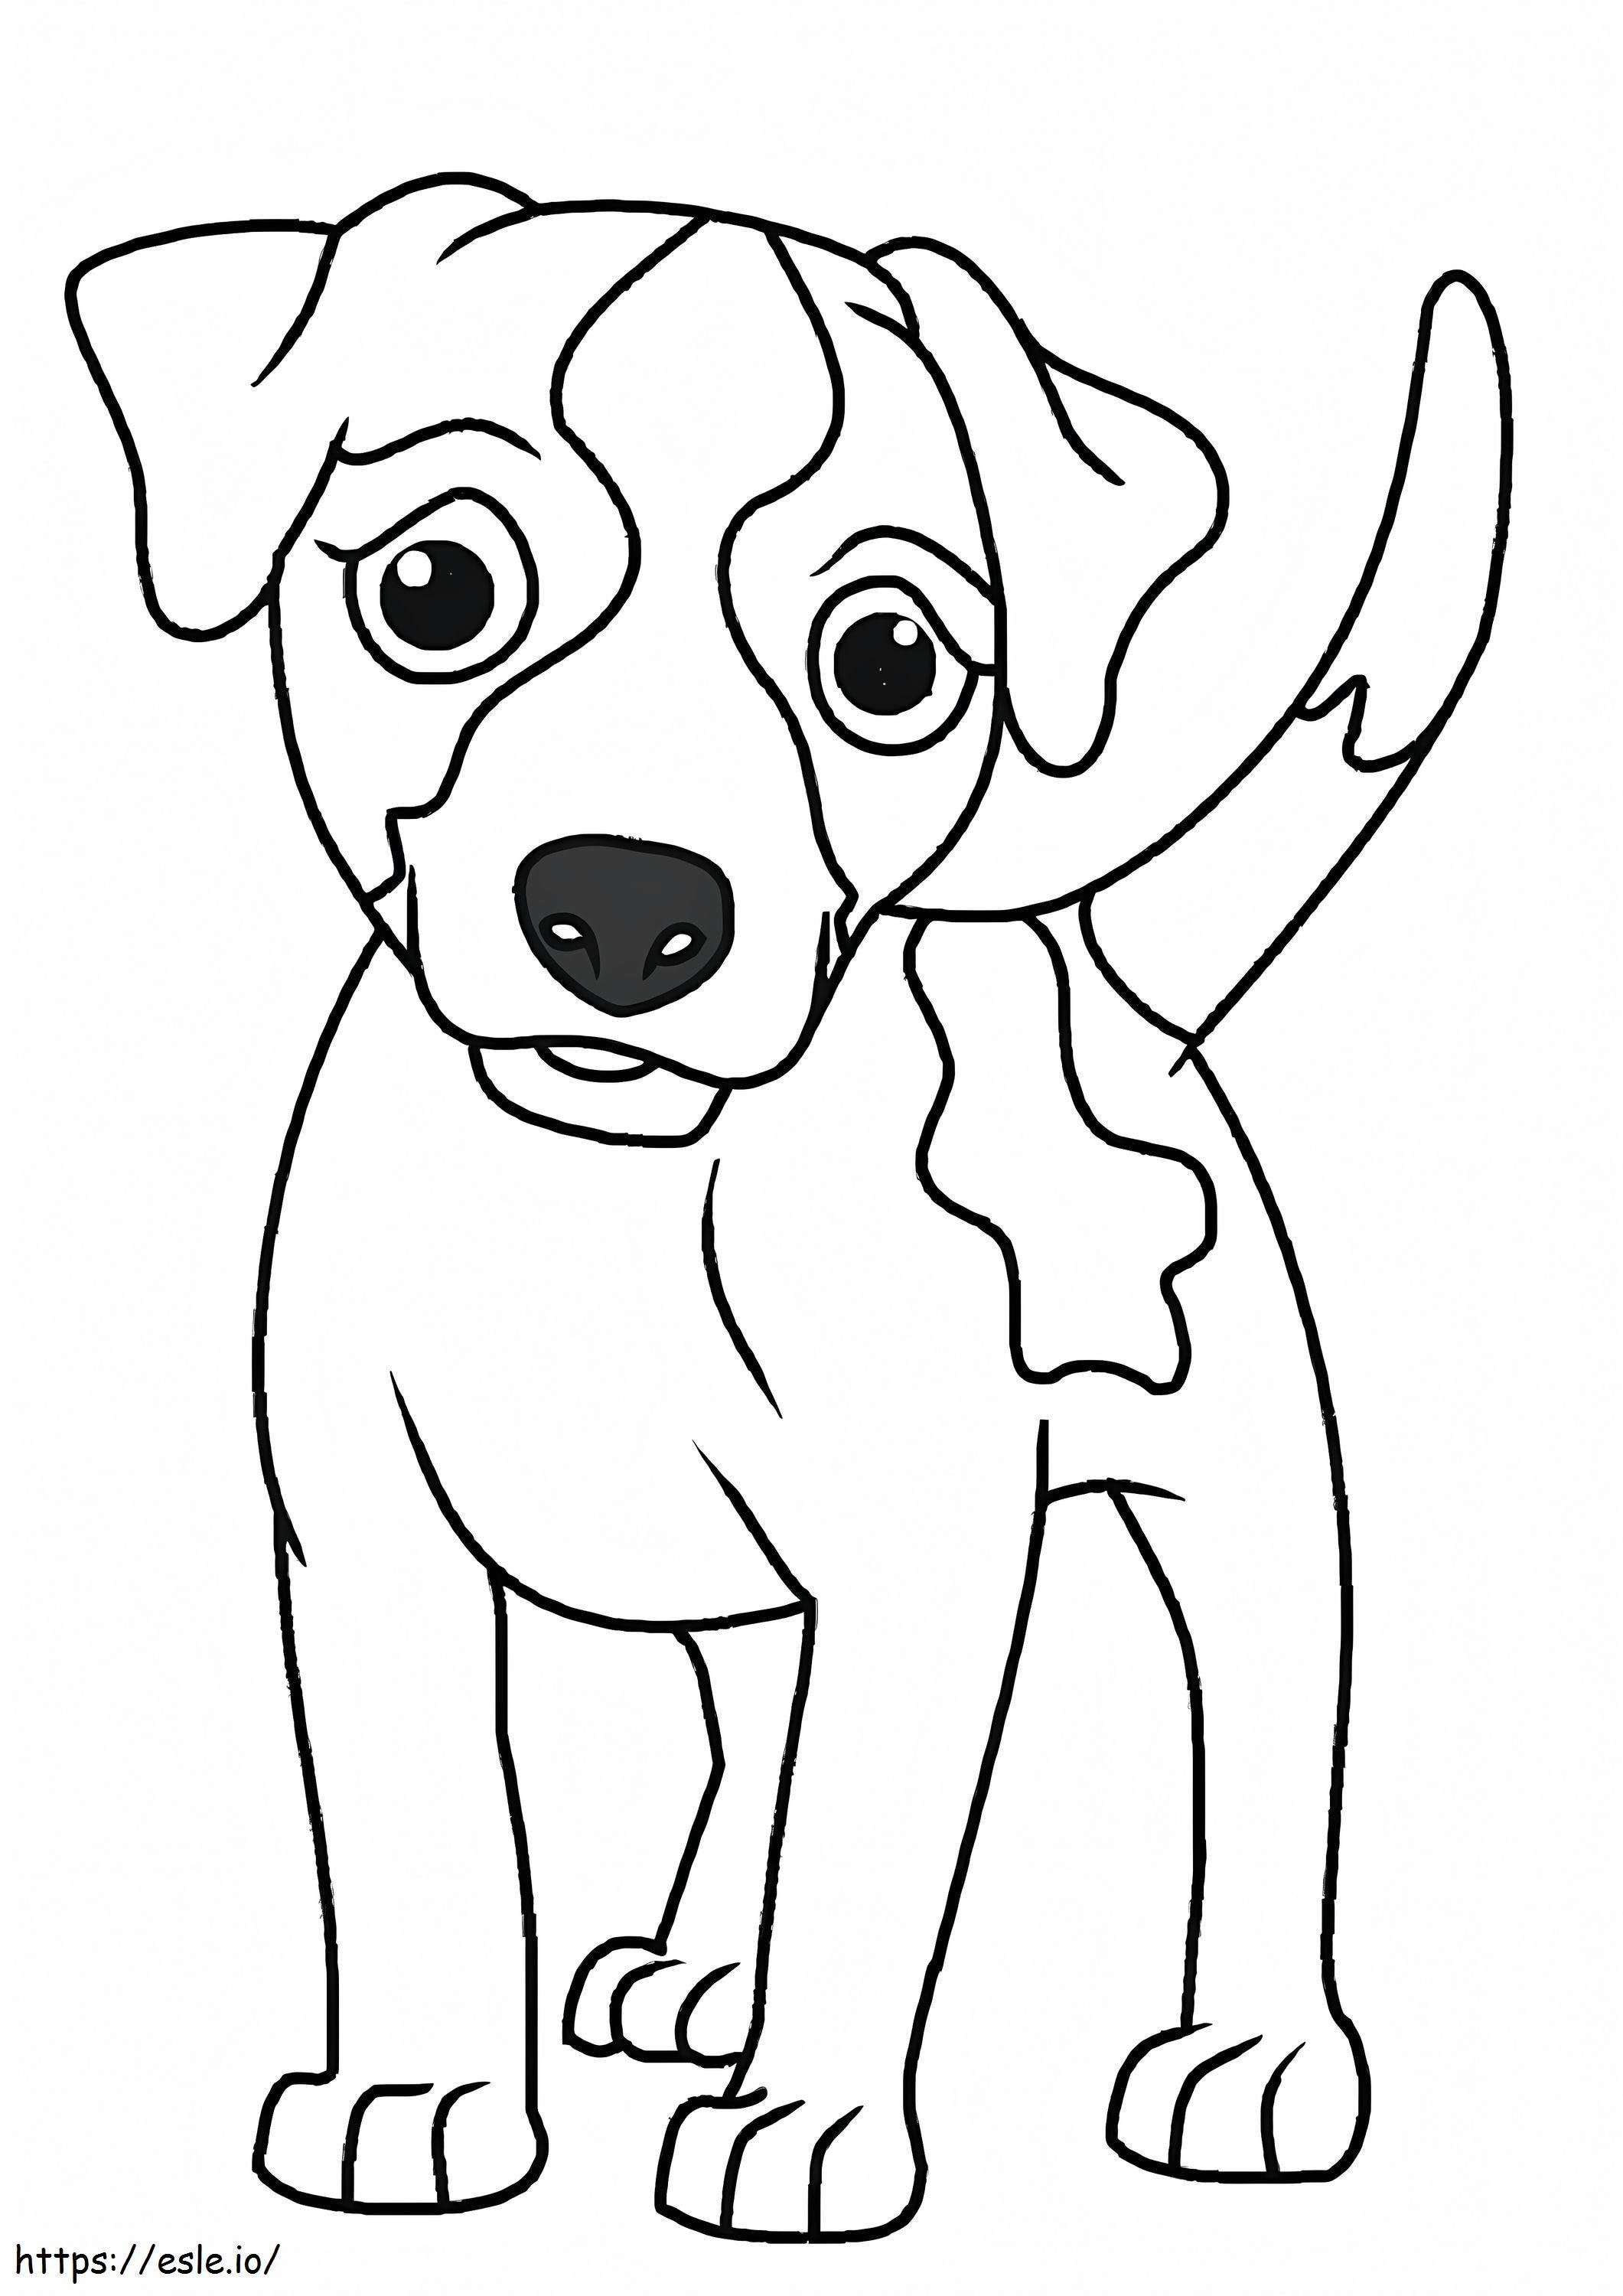 Basic Dog coloring page